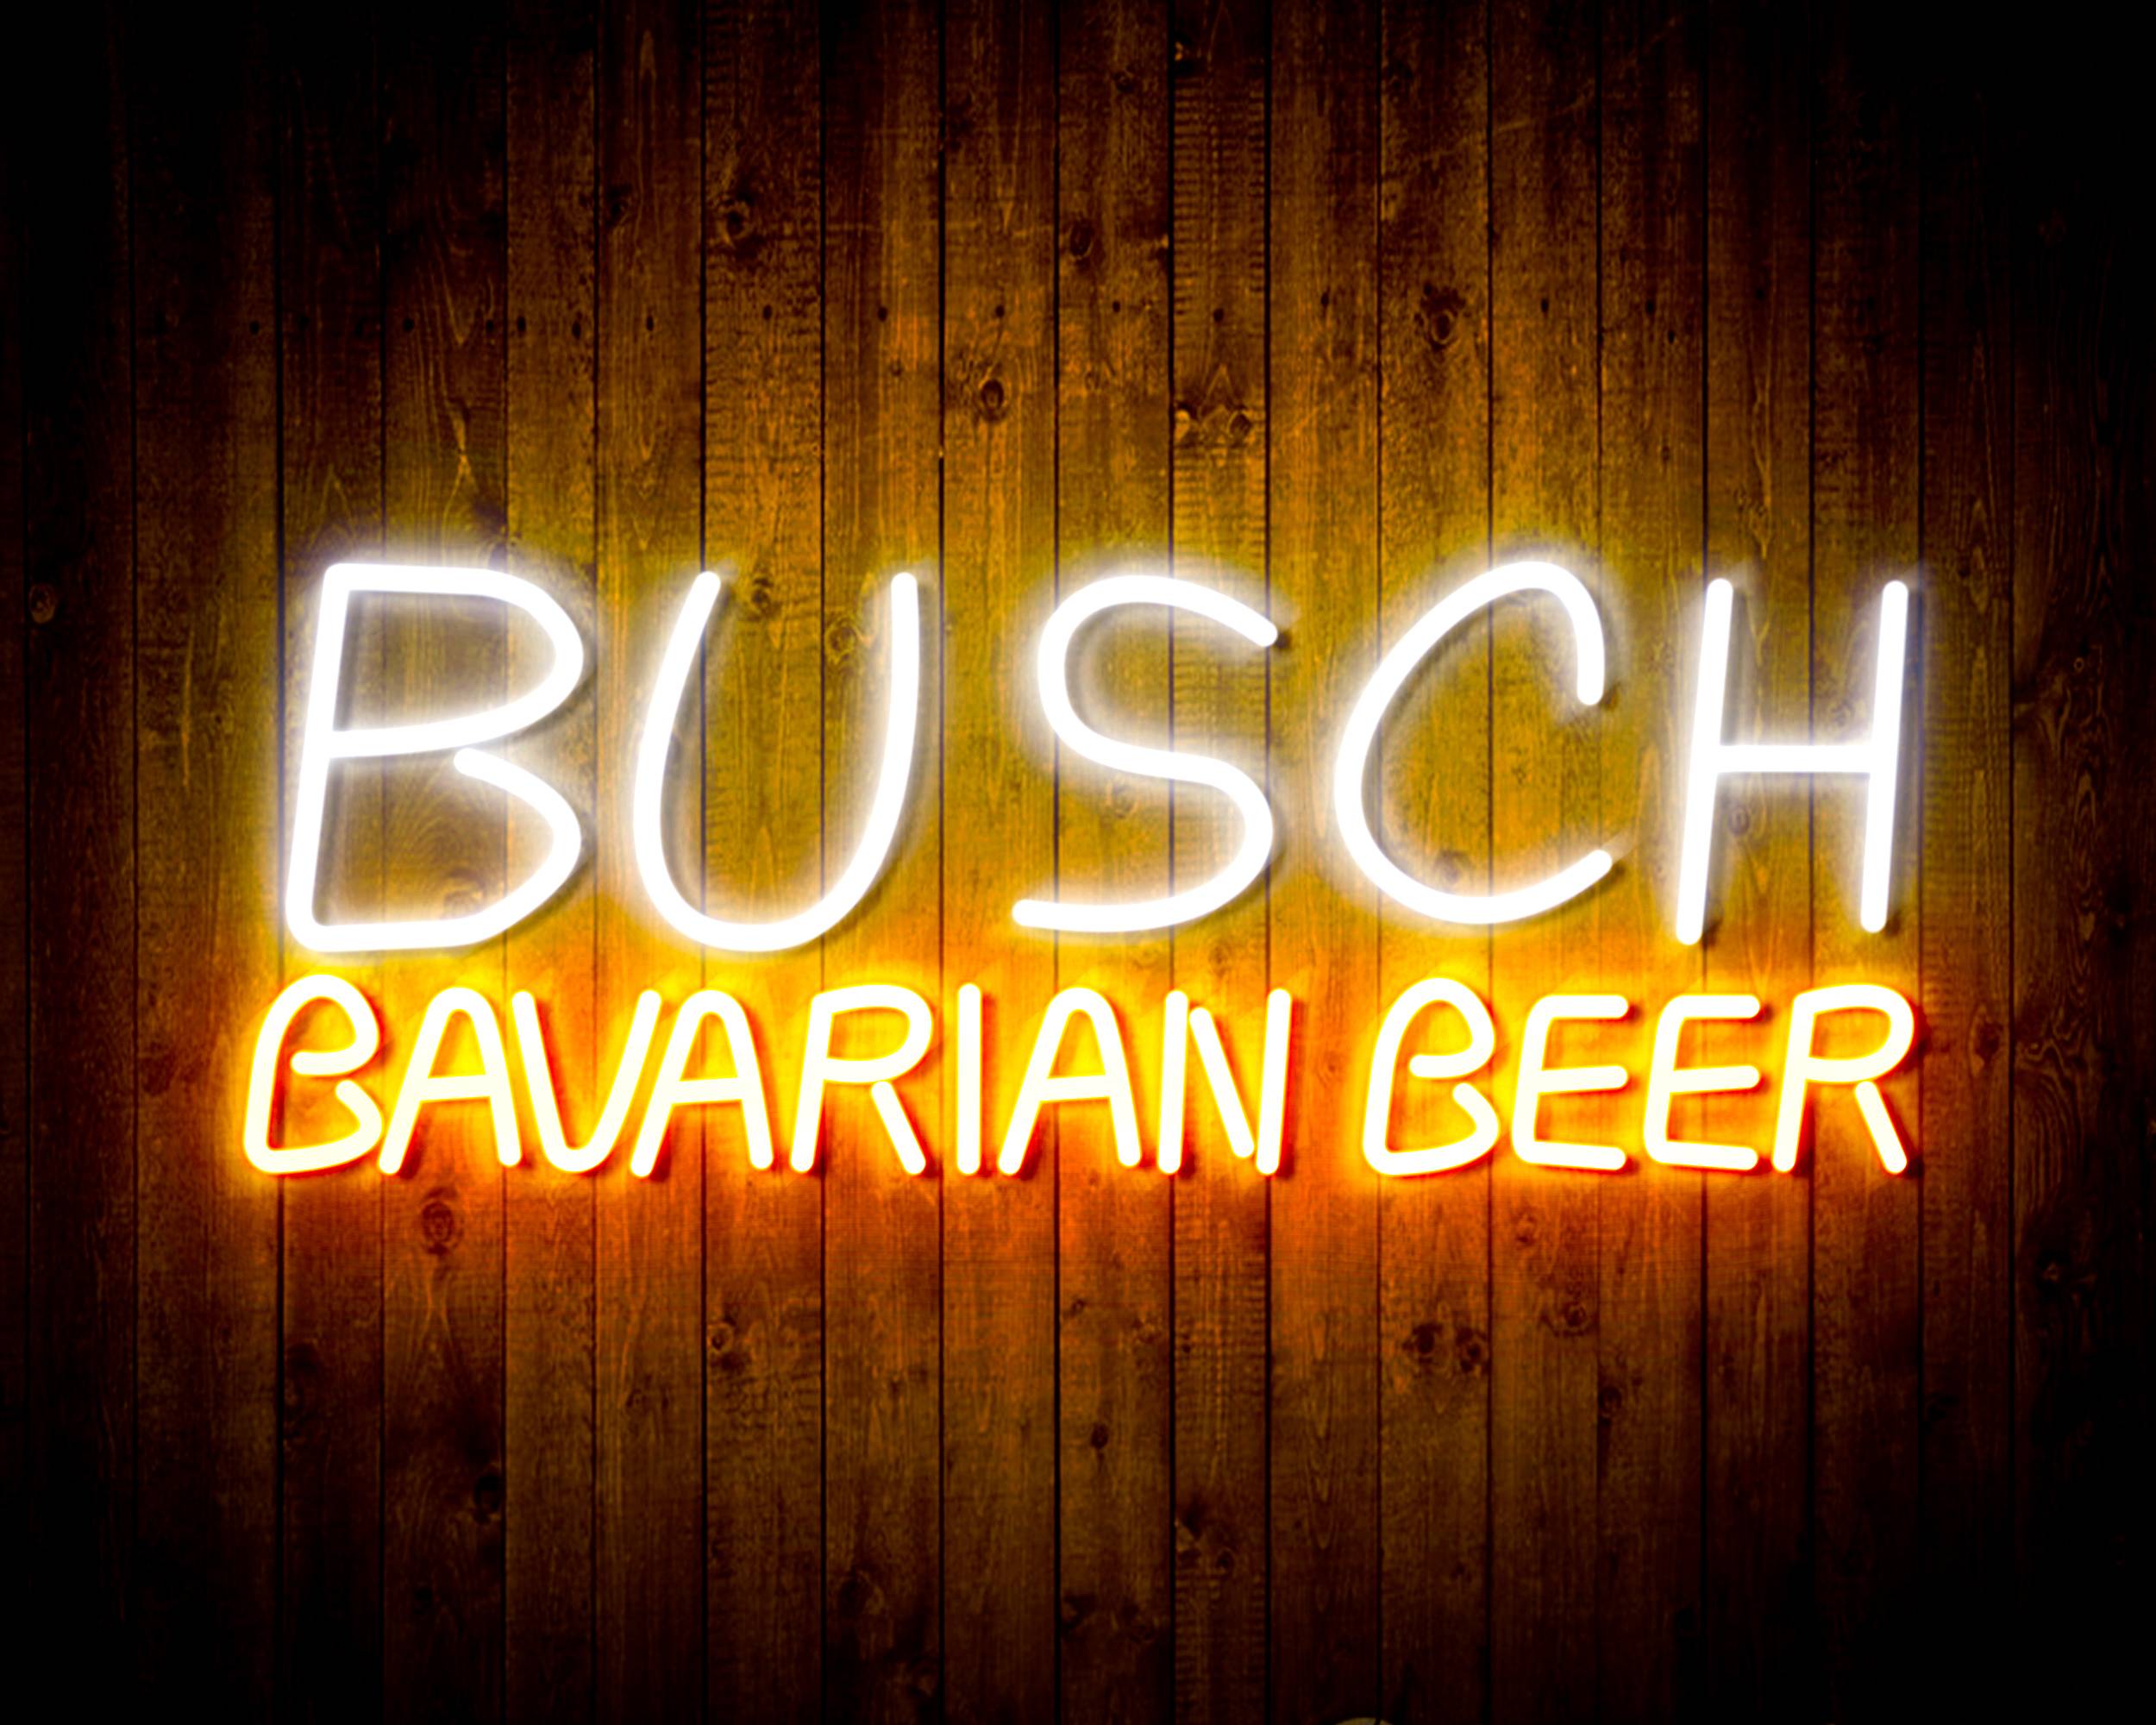 Busch Bavarian Beer Bar Neon LED Sign